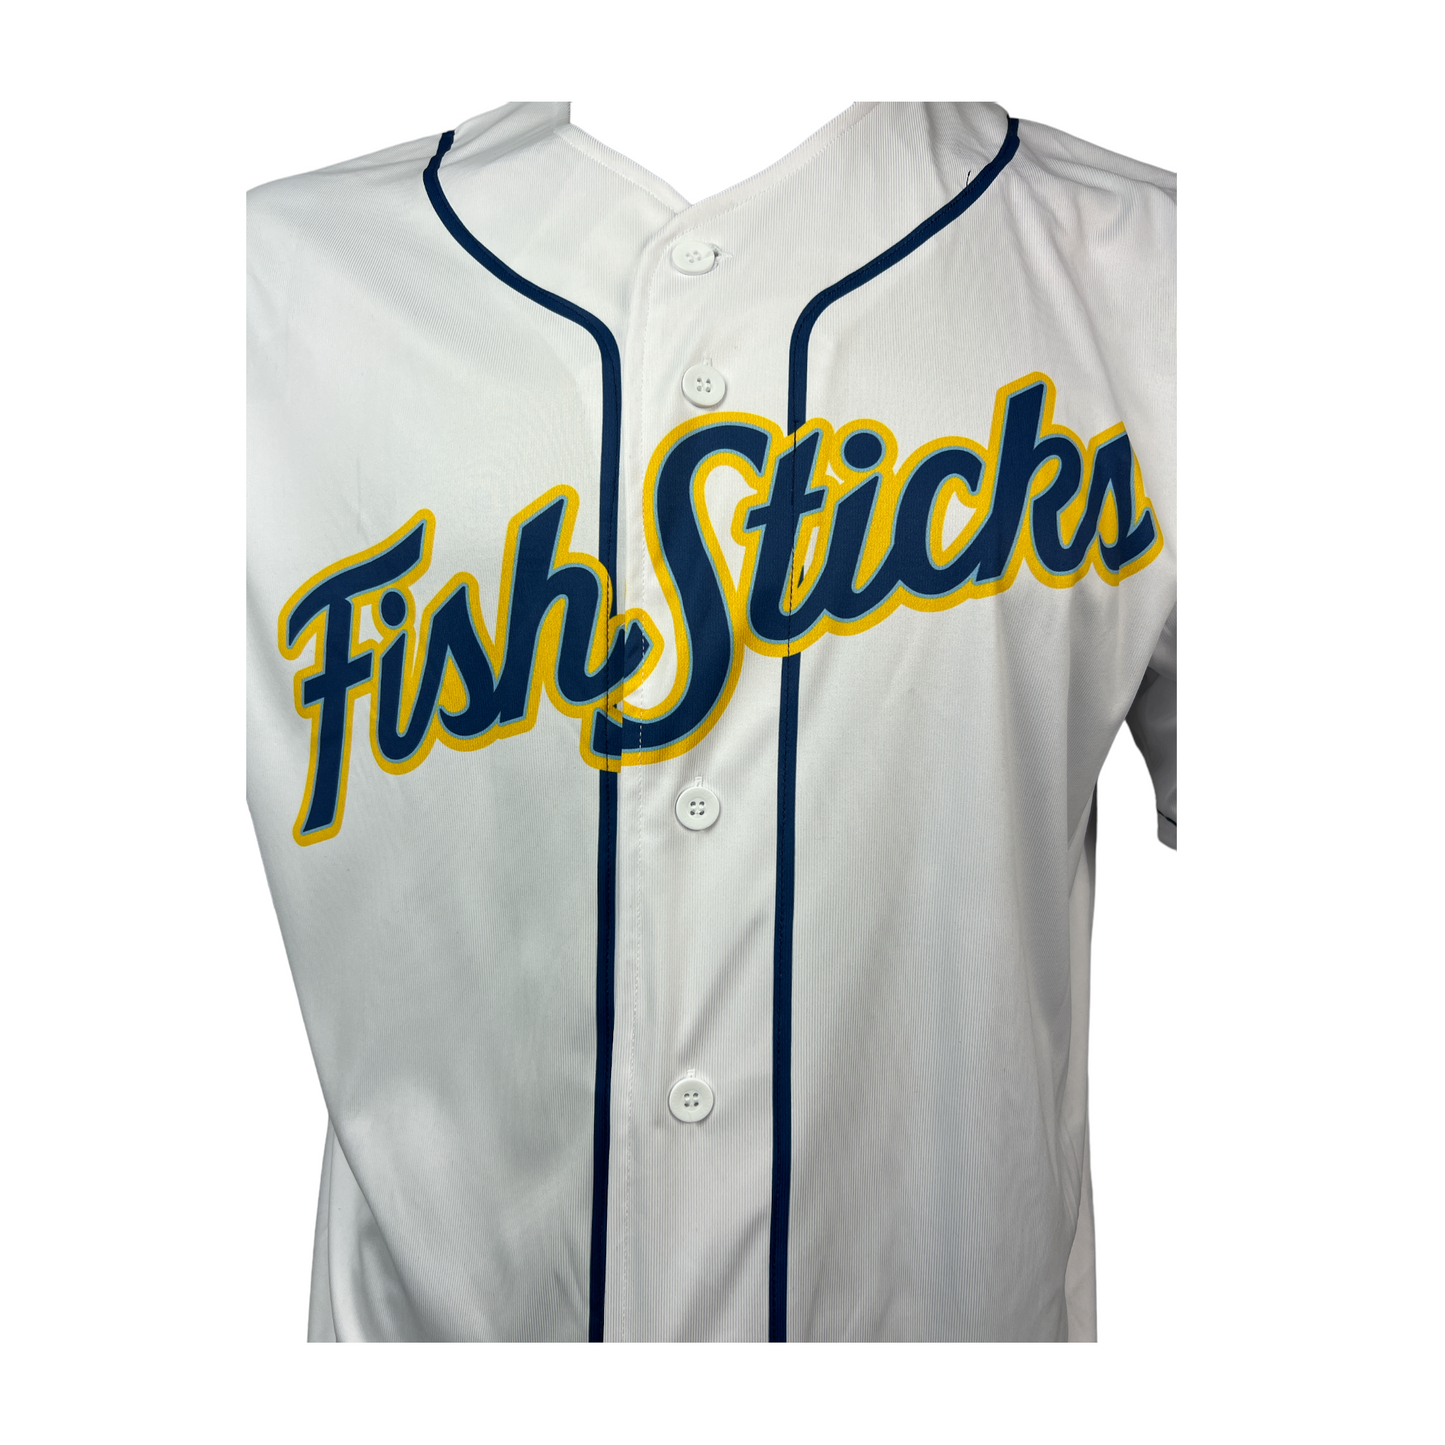 Fish Sticks White On Field Jersey